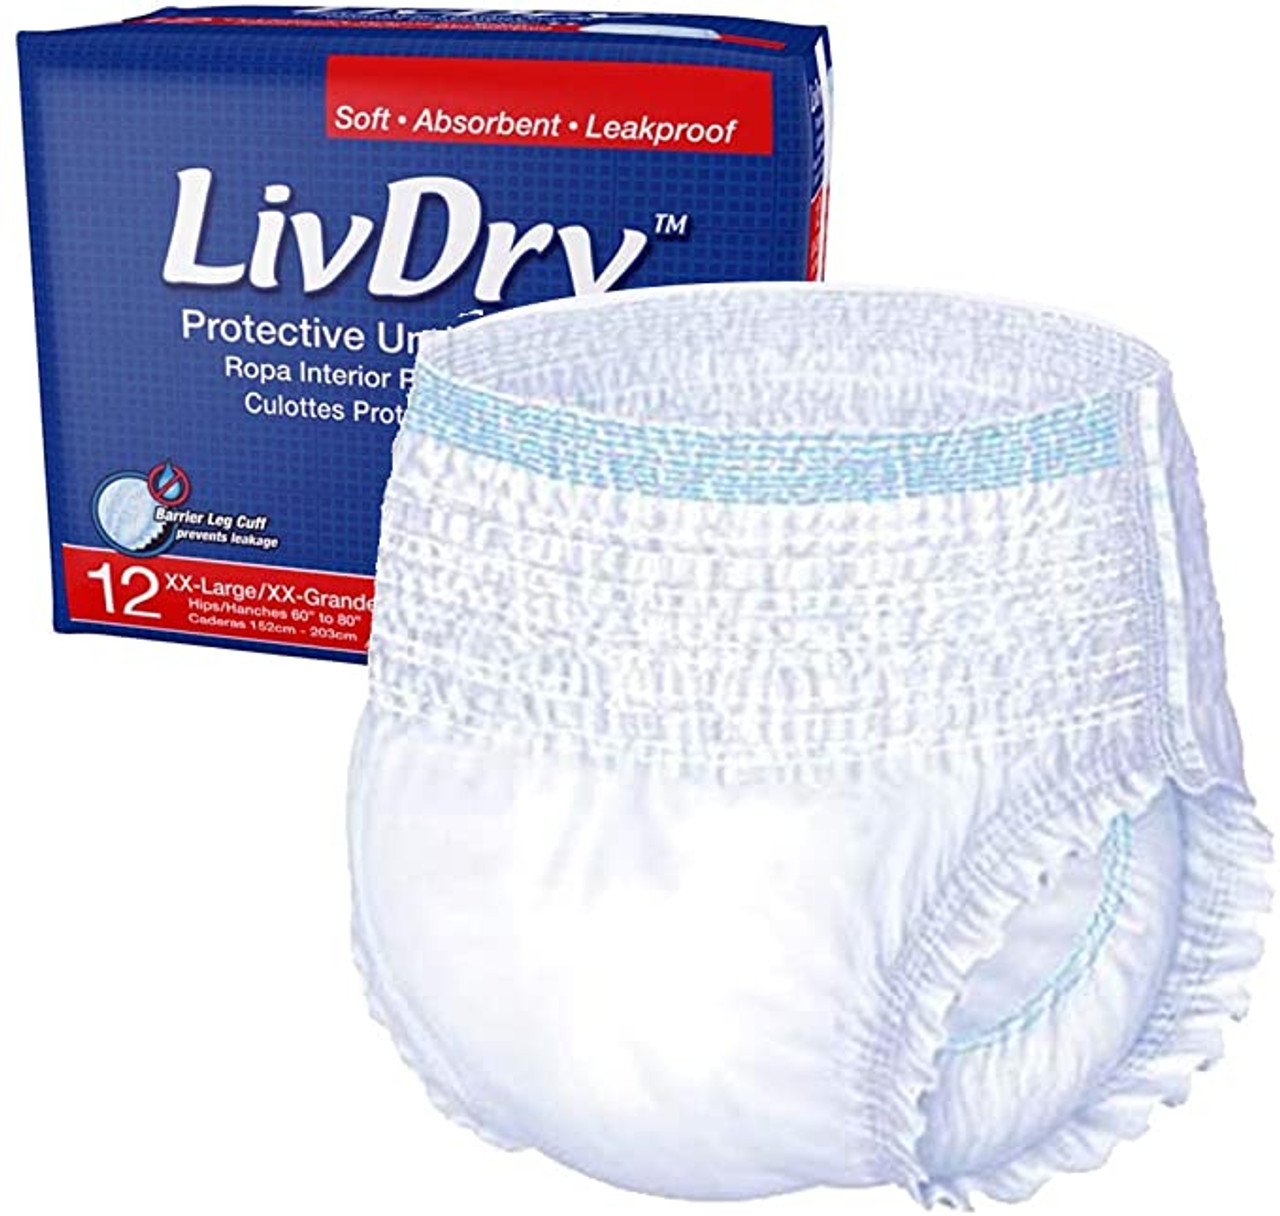 DryGuard - Leak-Proof Undies For Bladder Incontinence